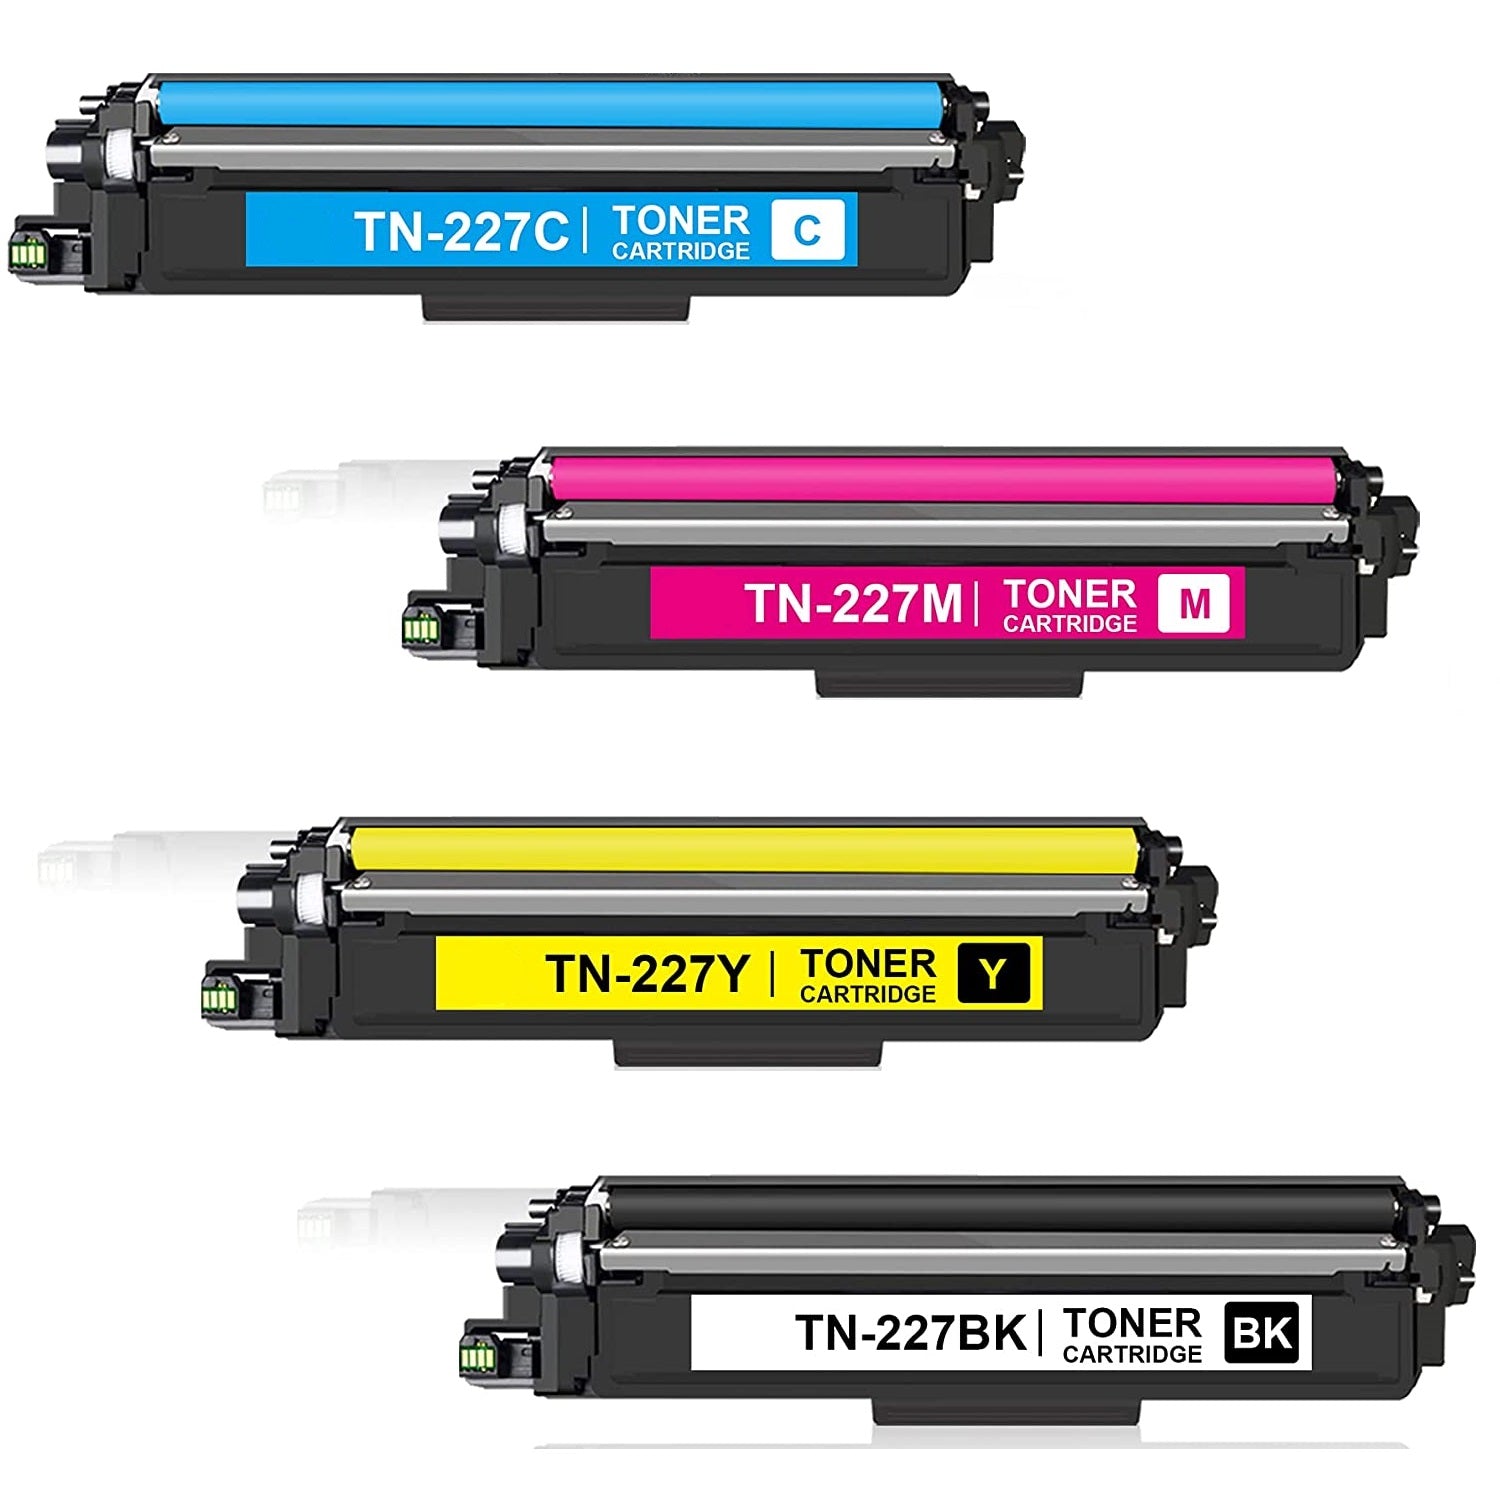 Toner Bank TN227 Toner Cartridge Compatible with CHIP - Black/Cyan